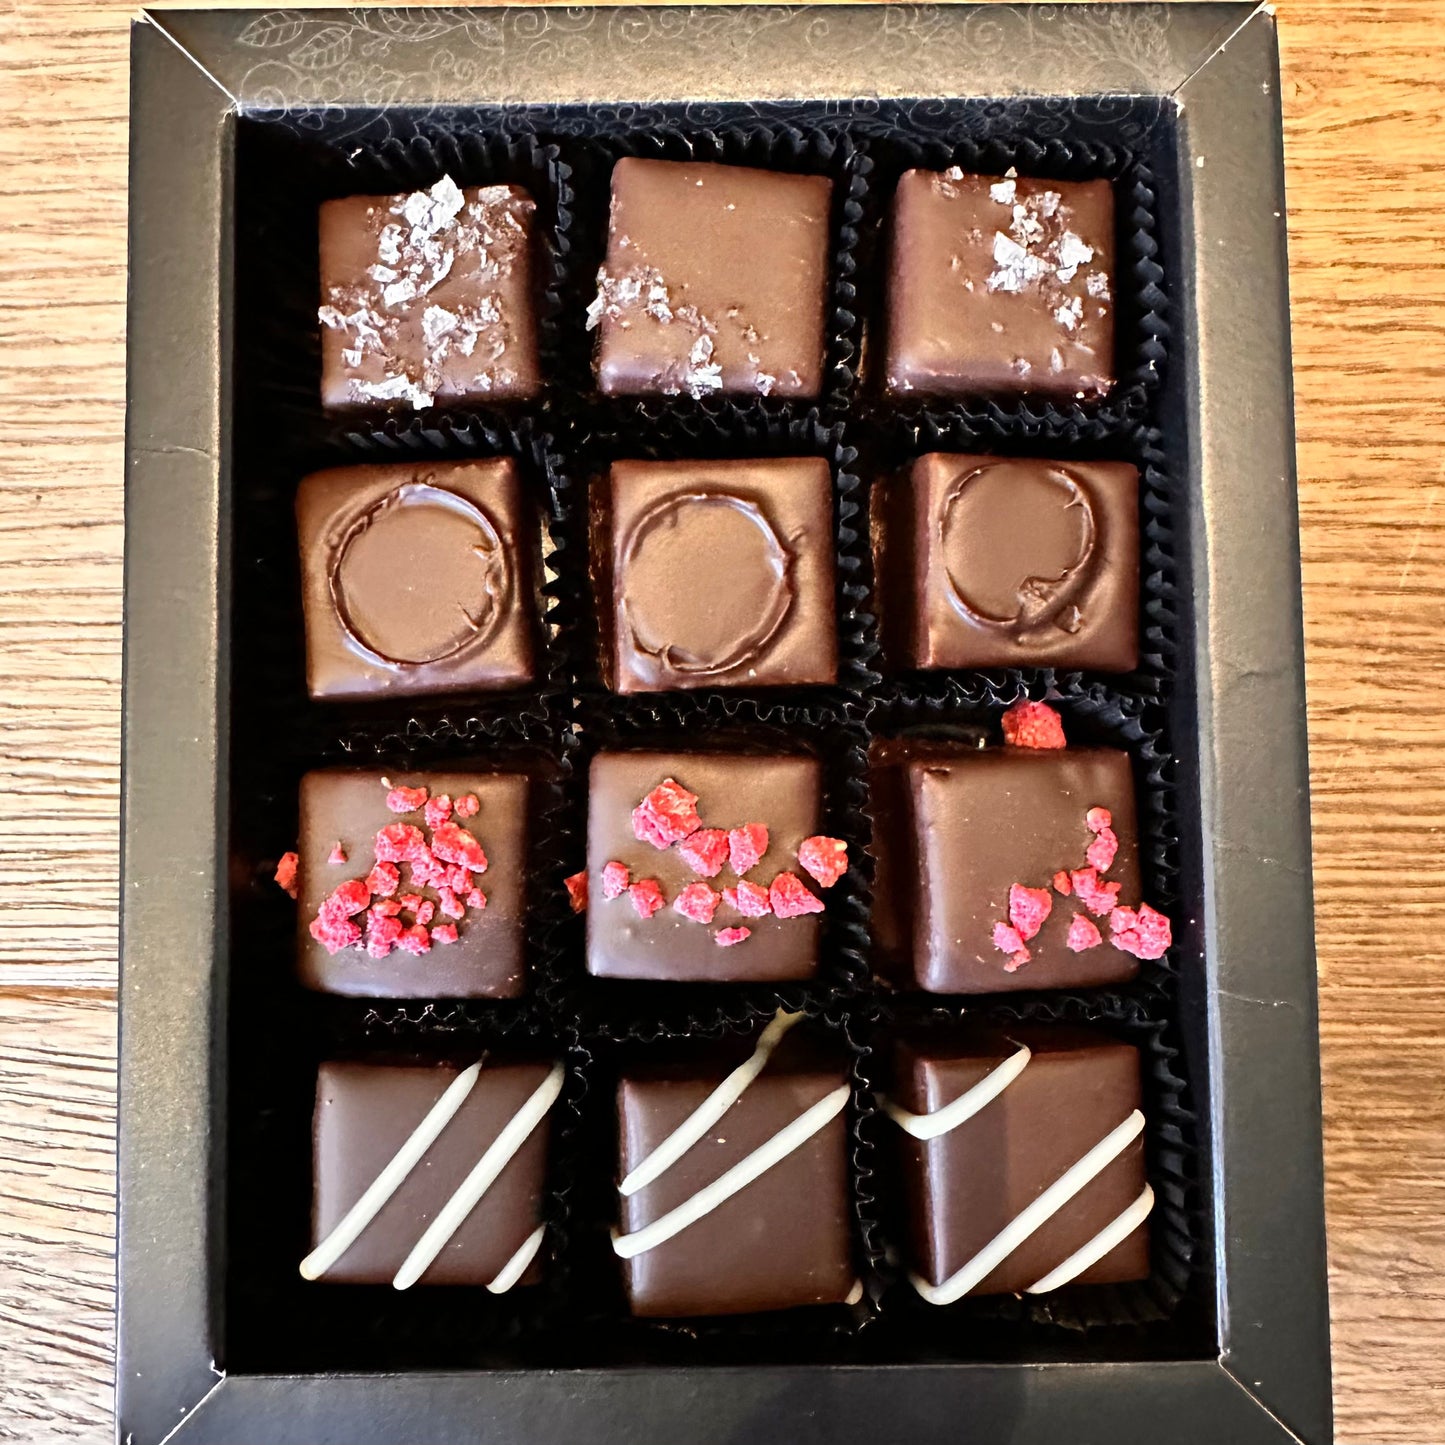 Choklad - 12 utvalda praliner